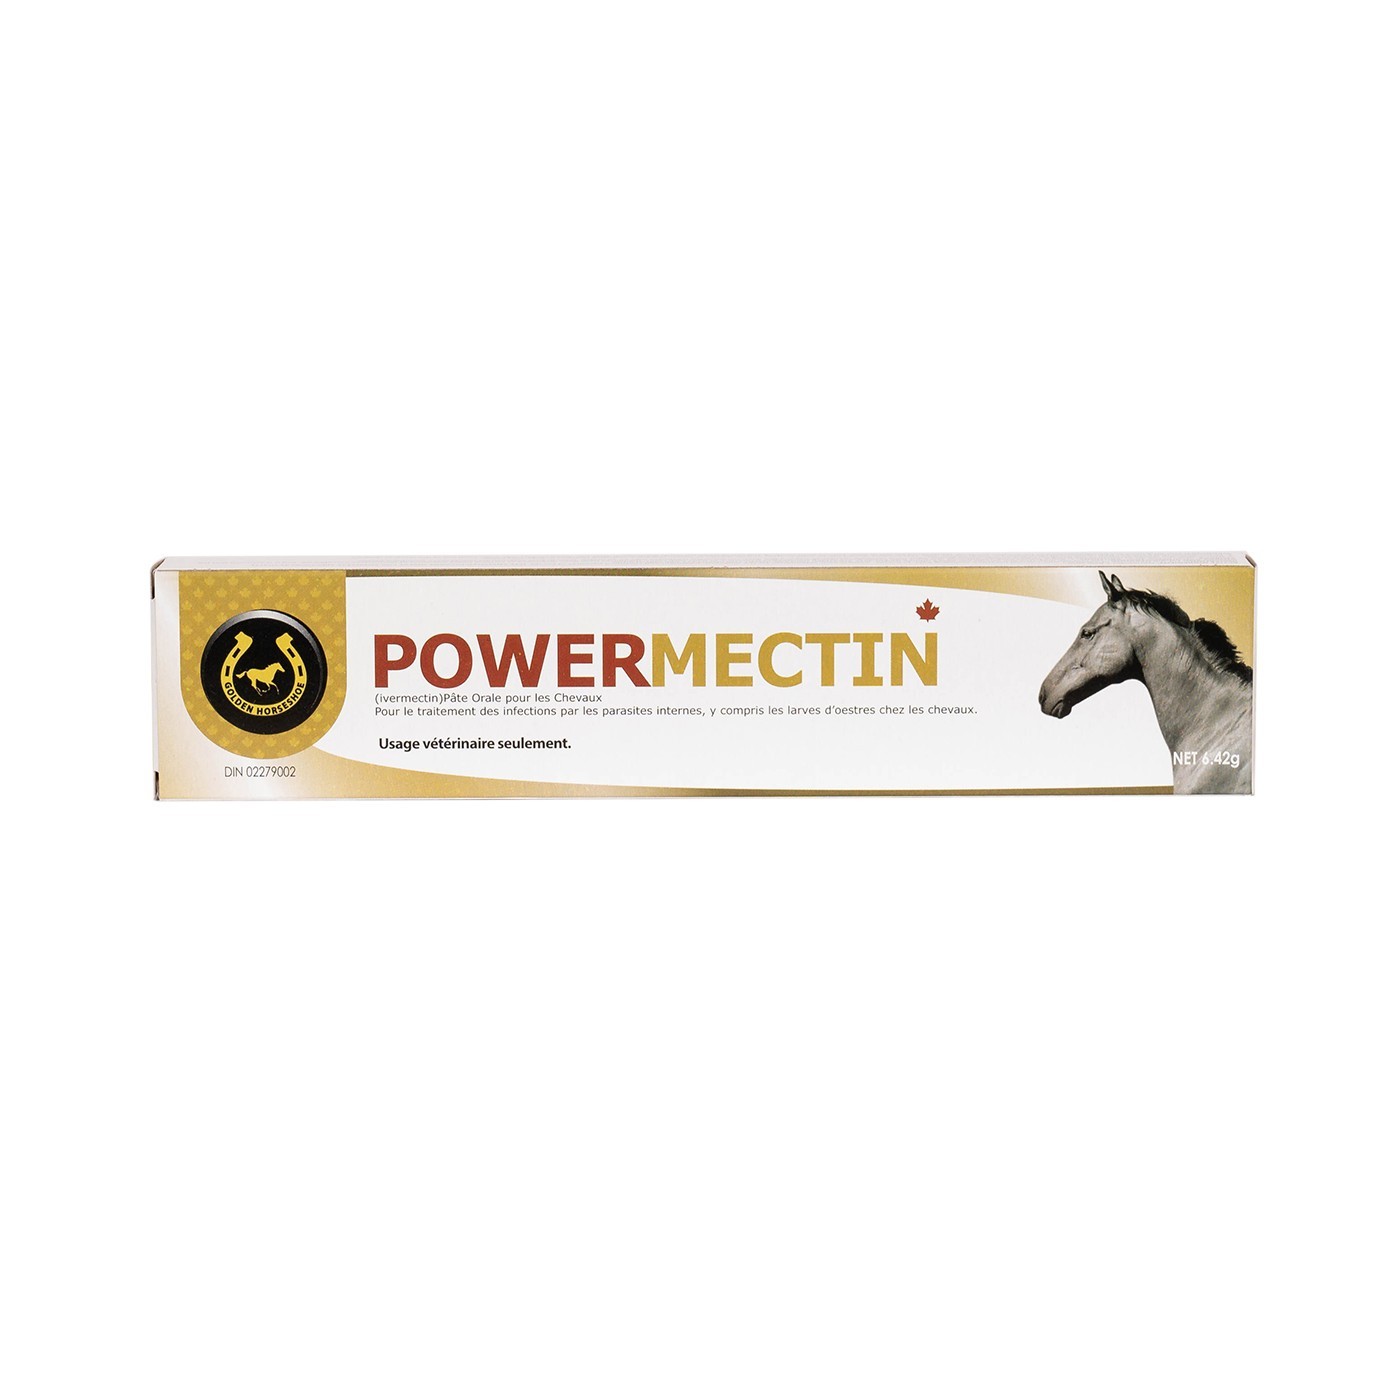 Powermectin Ivermectin - Equine Wormer - 6.42g